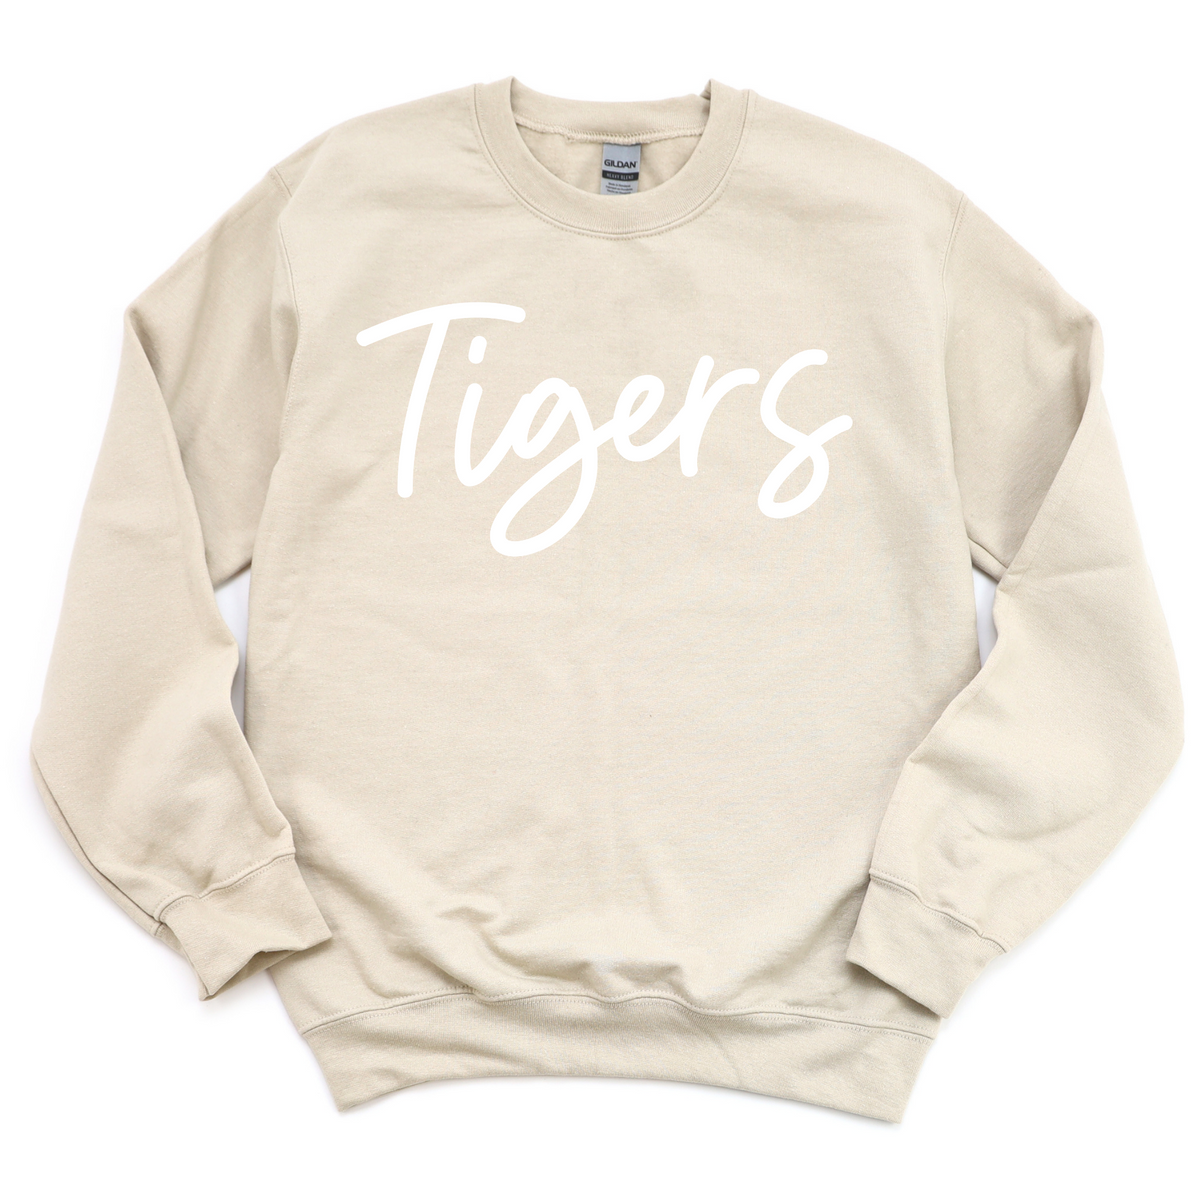 Tigers Crewneck Sweatshirt